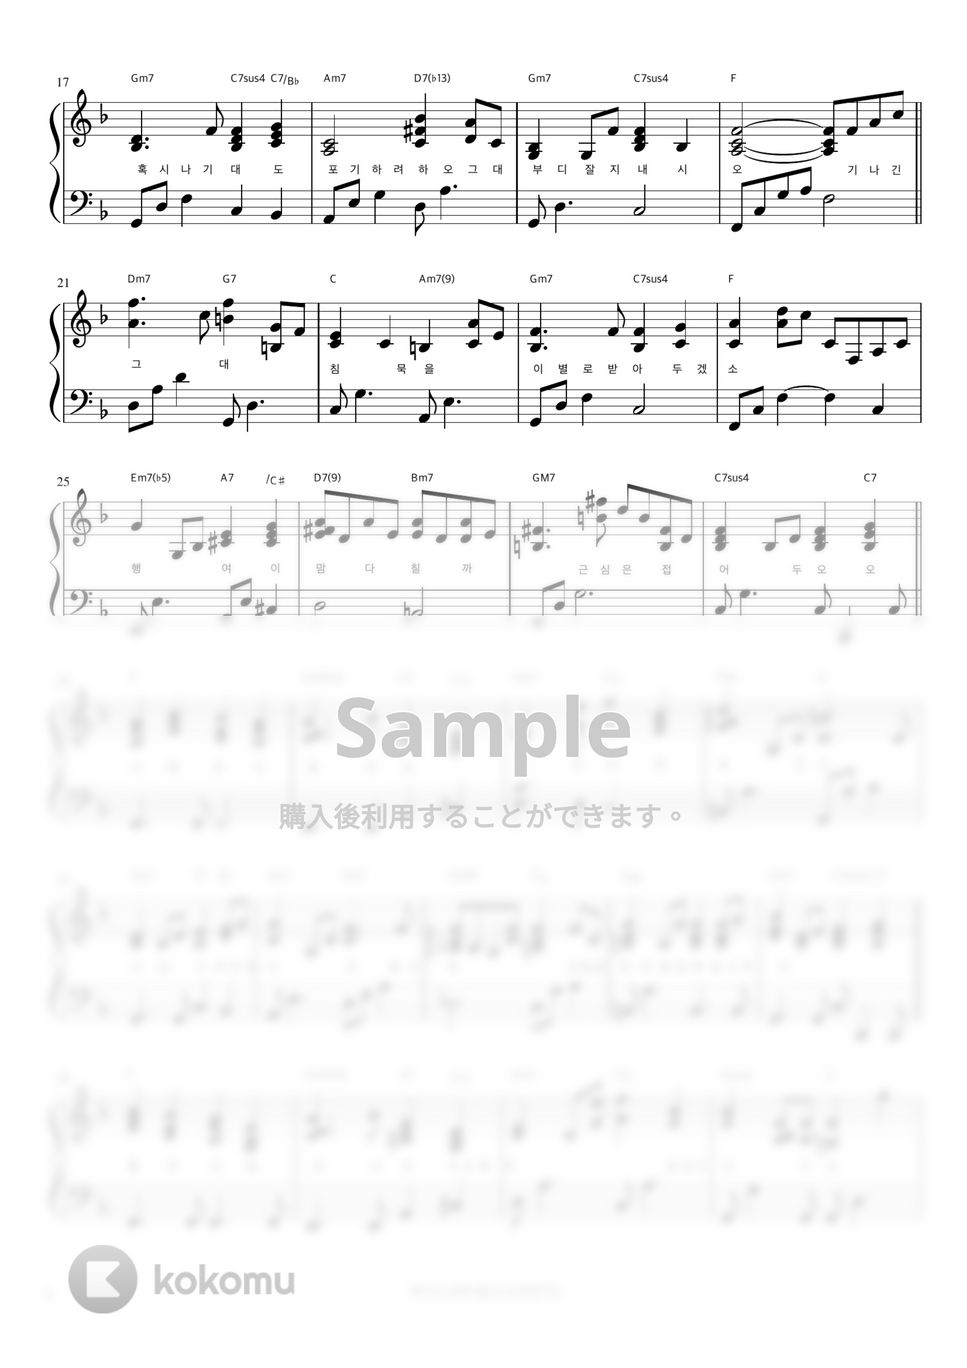 kim Kwang Jin - The Letter (伴奏楽譜) by 피아노정류장